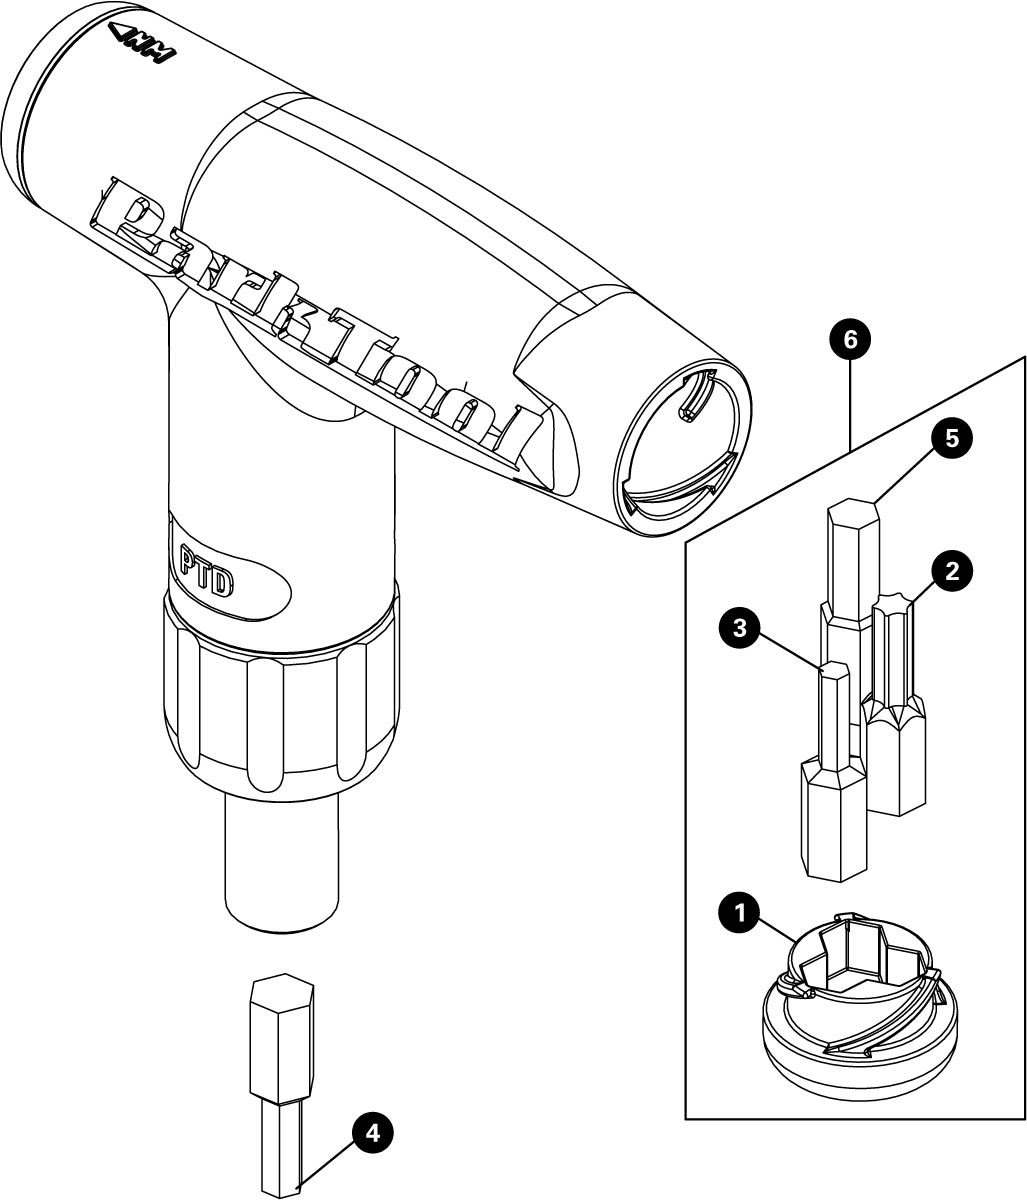 Parts diagram for PTD-6 Preset Torque Driver — 6 Nm, enlarged